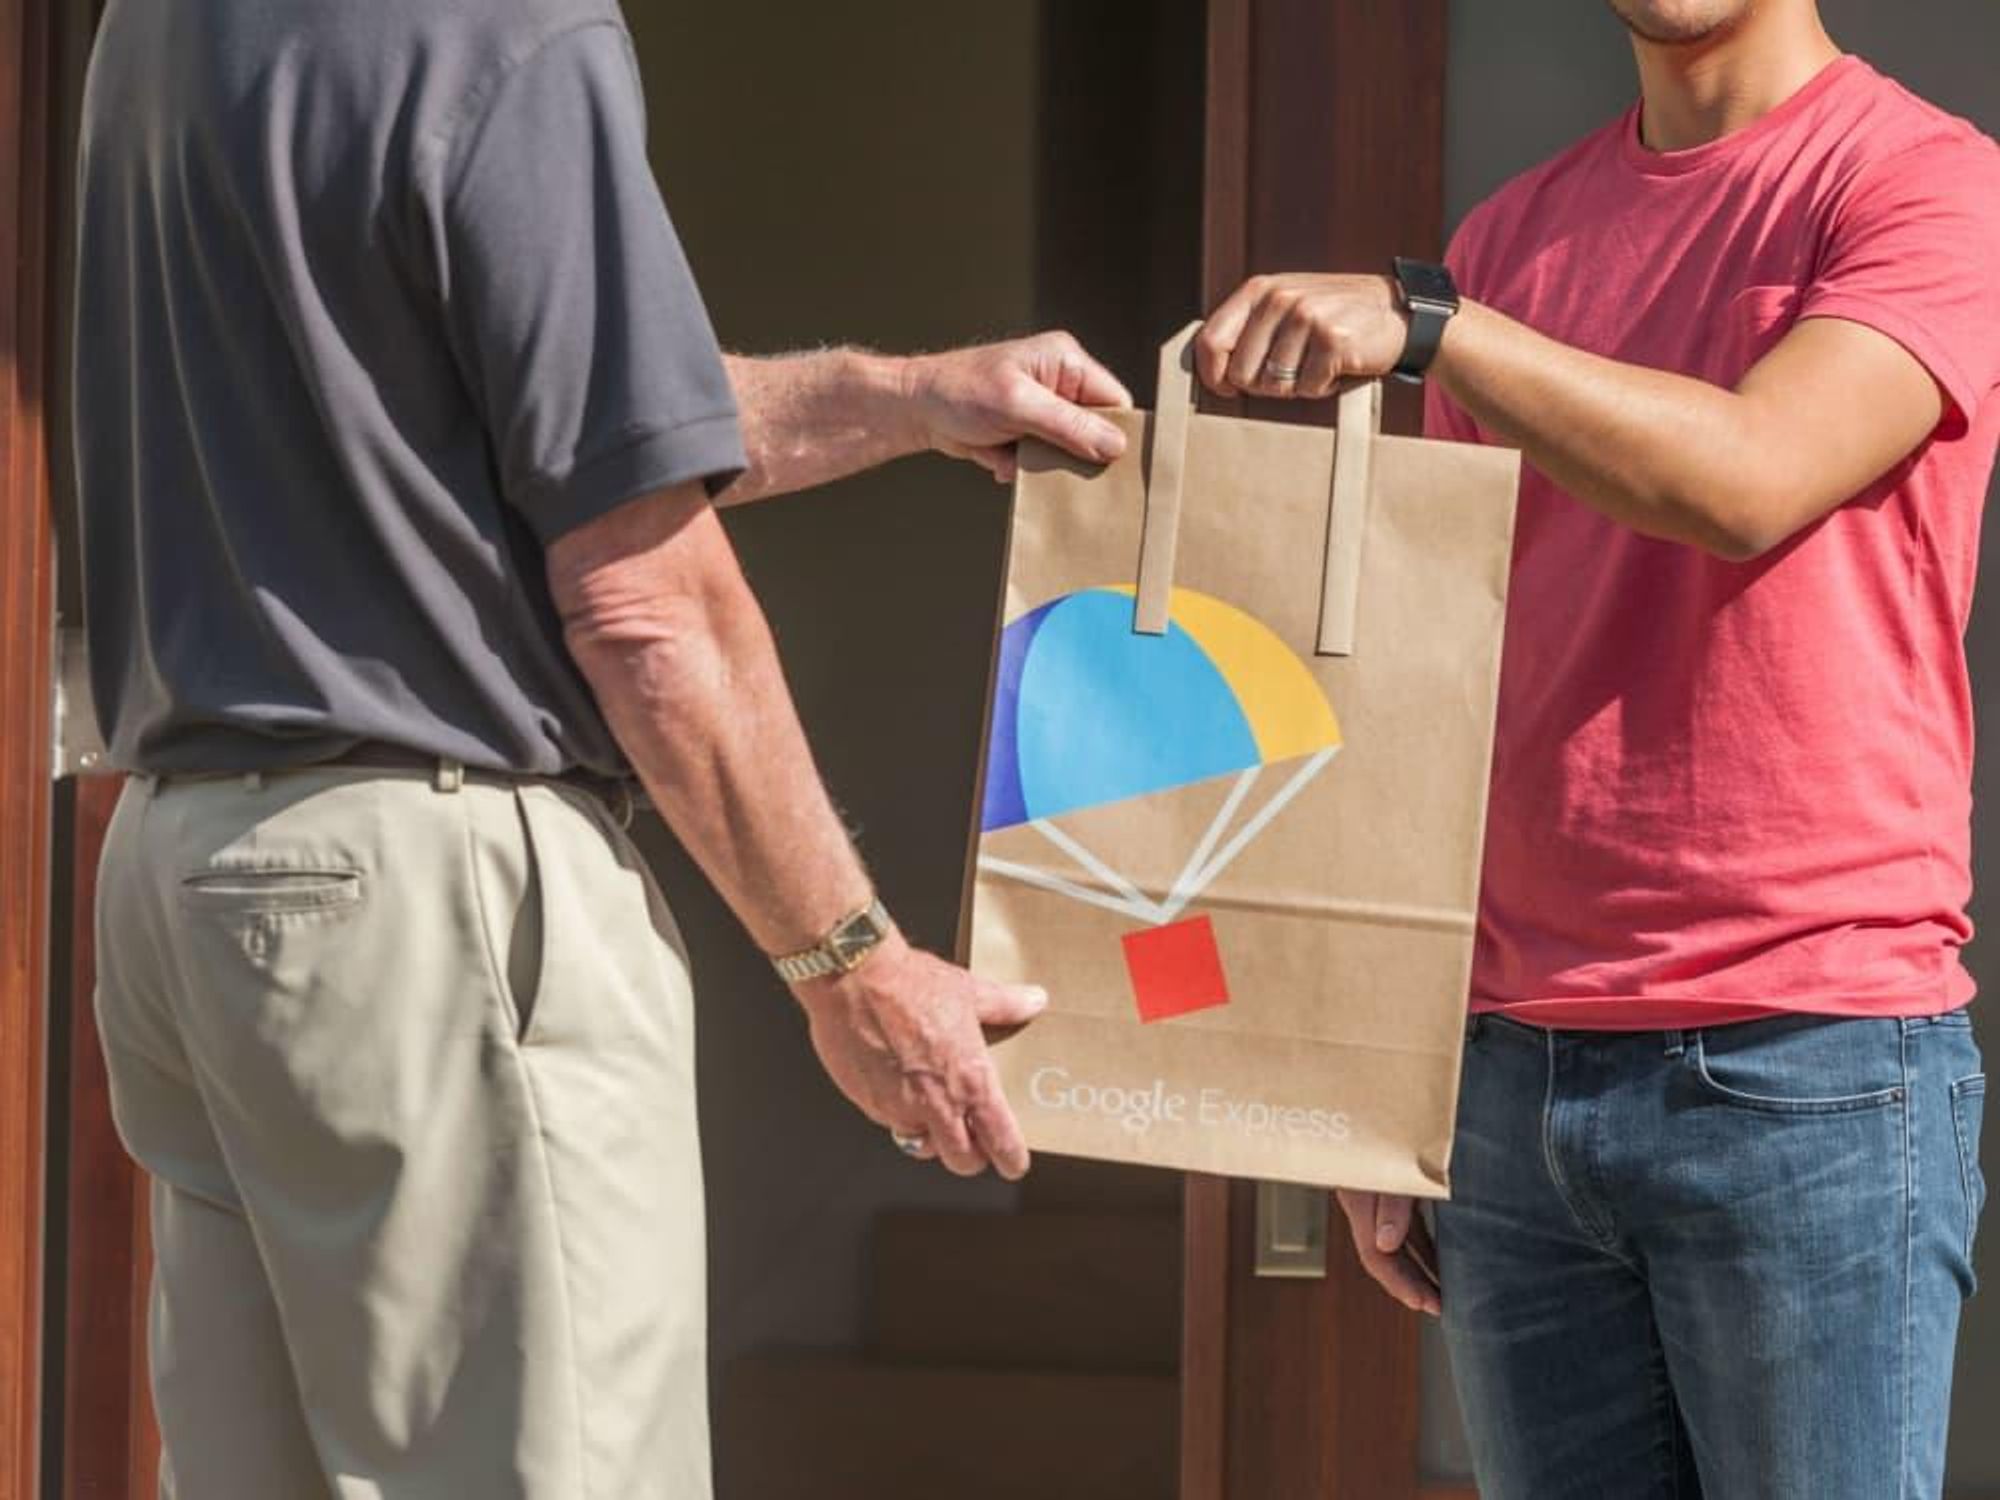 Google Express logo bag door delivery service